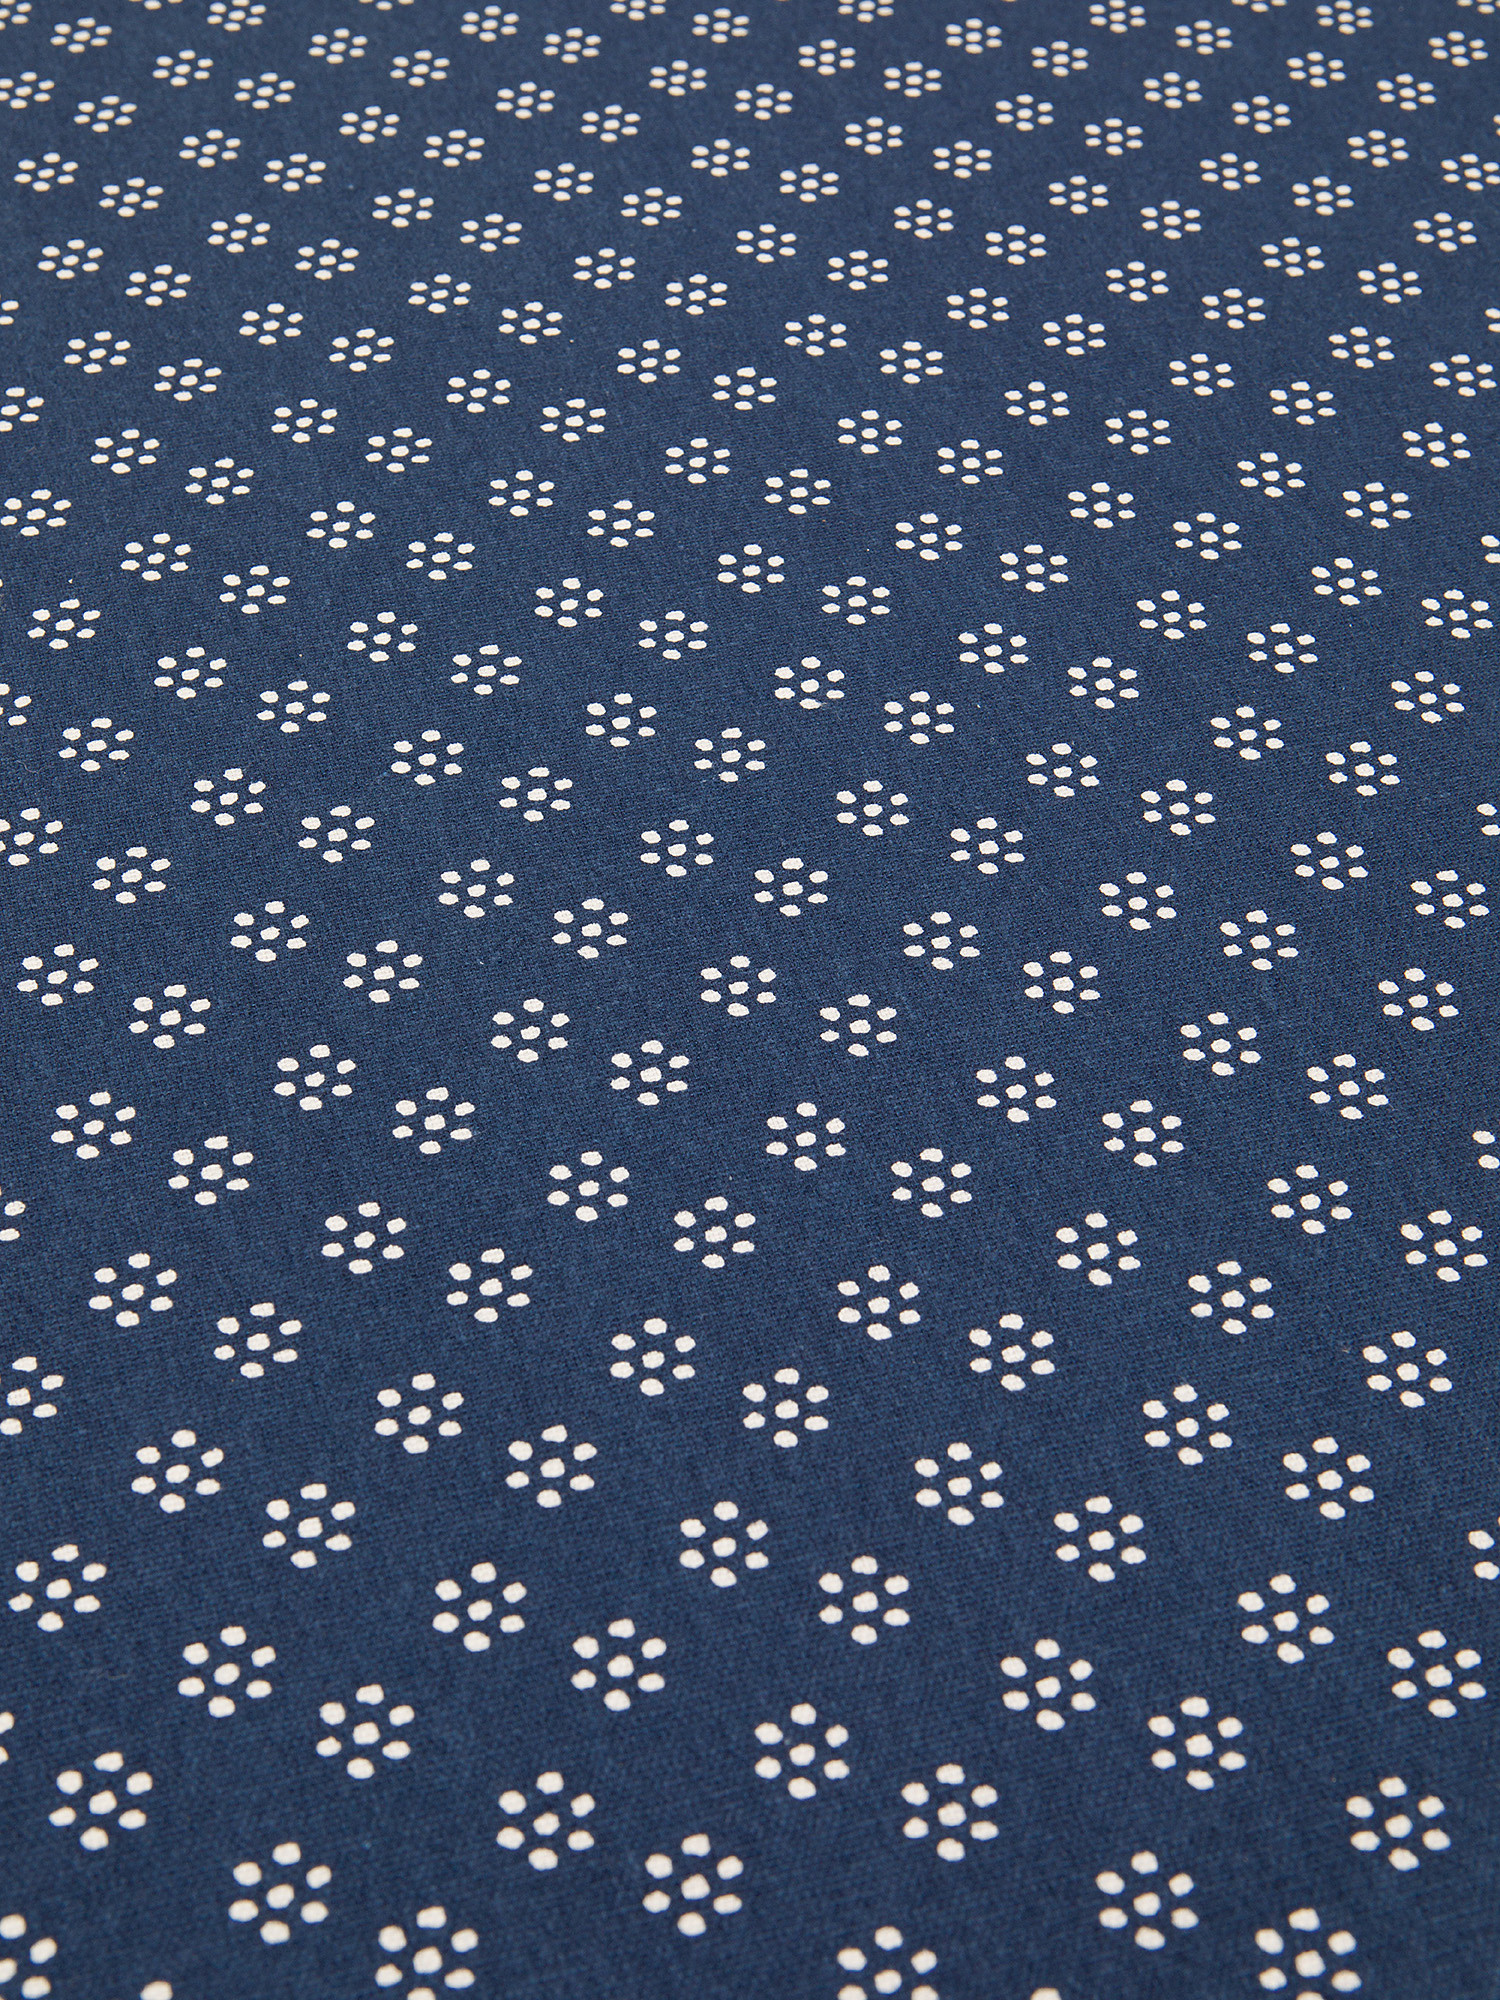 Tovaglia rotonda puro cotone stampa dots, Blu, large image number 1